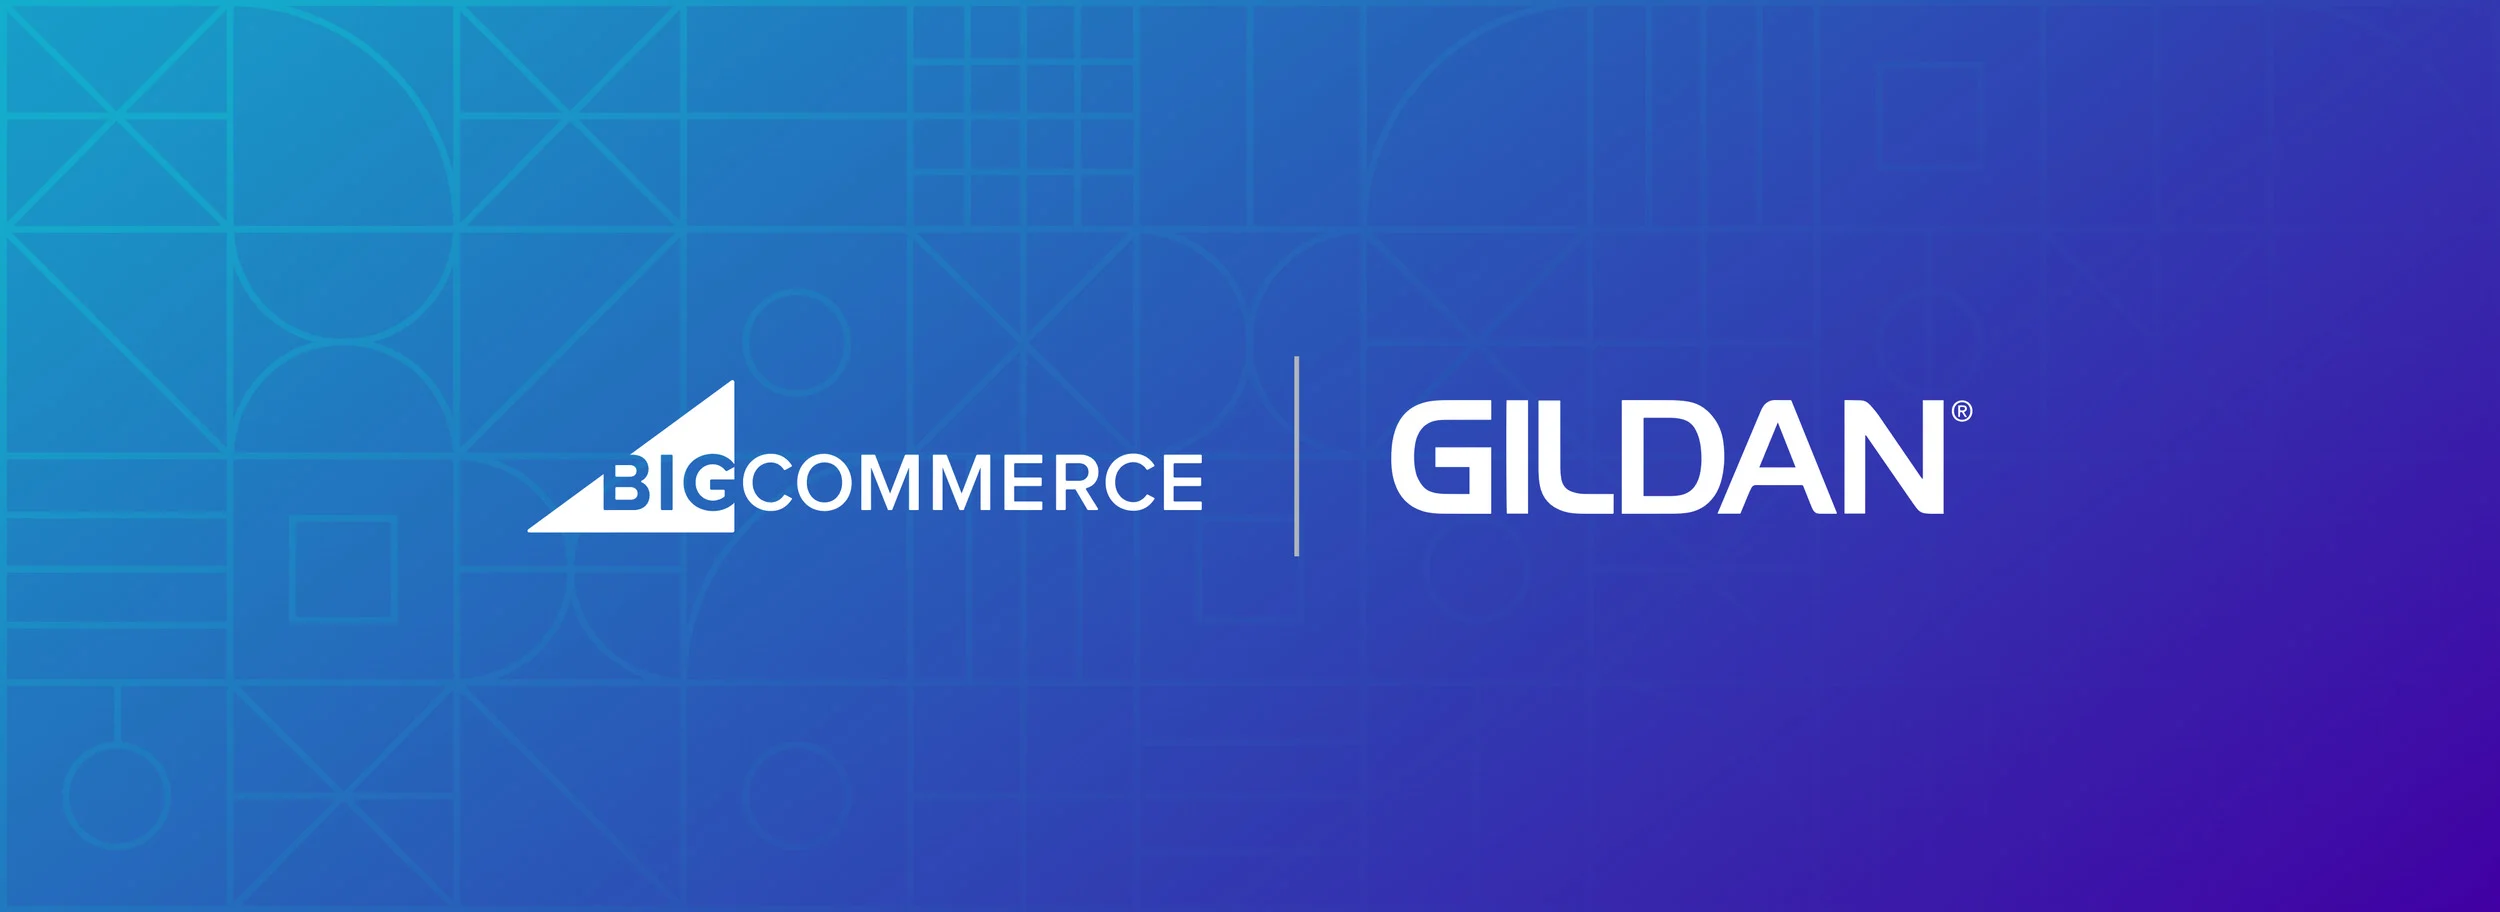 https://cms-wp.bigcommerce.com/wp-content/uploads/2021/10/Gildan-and-BigCommerce-Logos.jpg